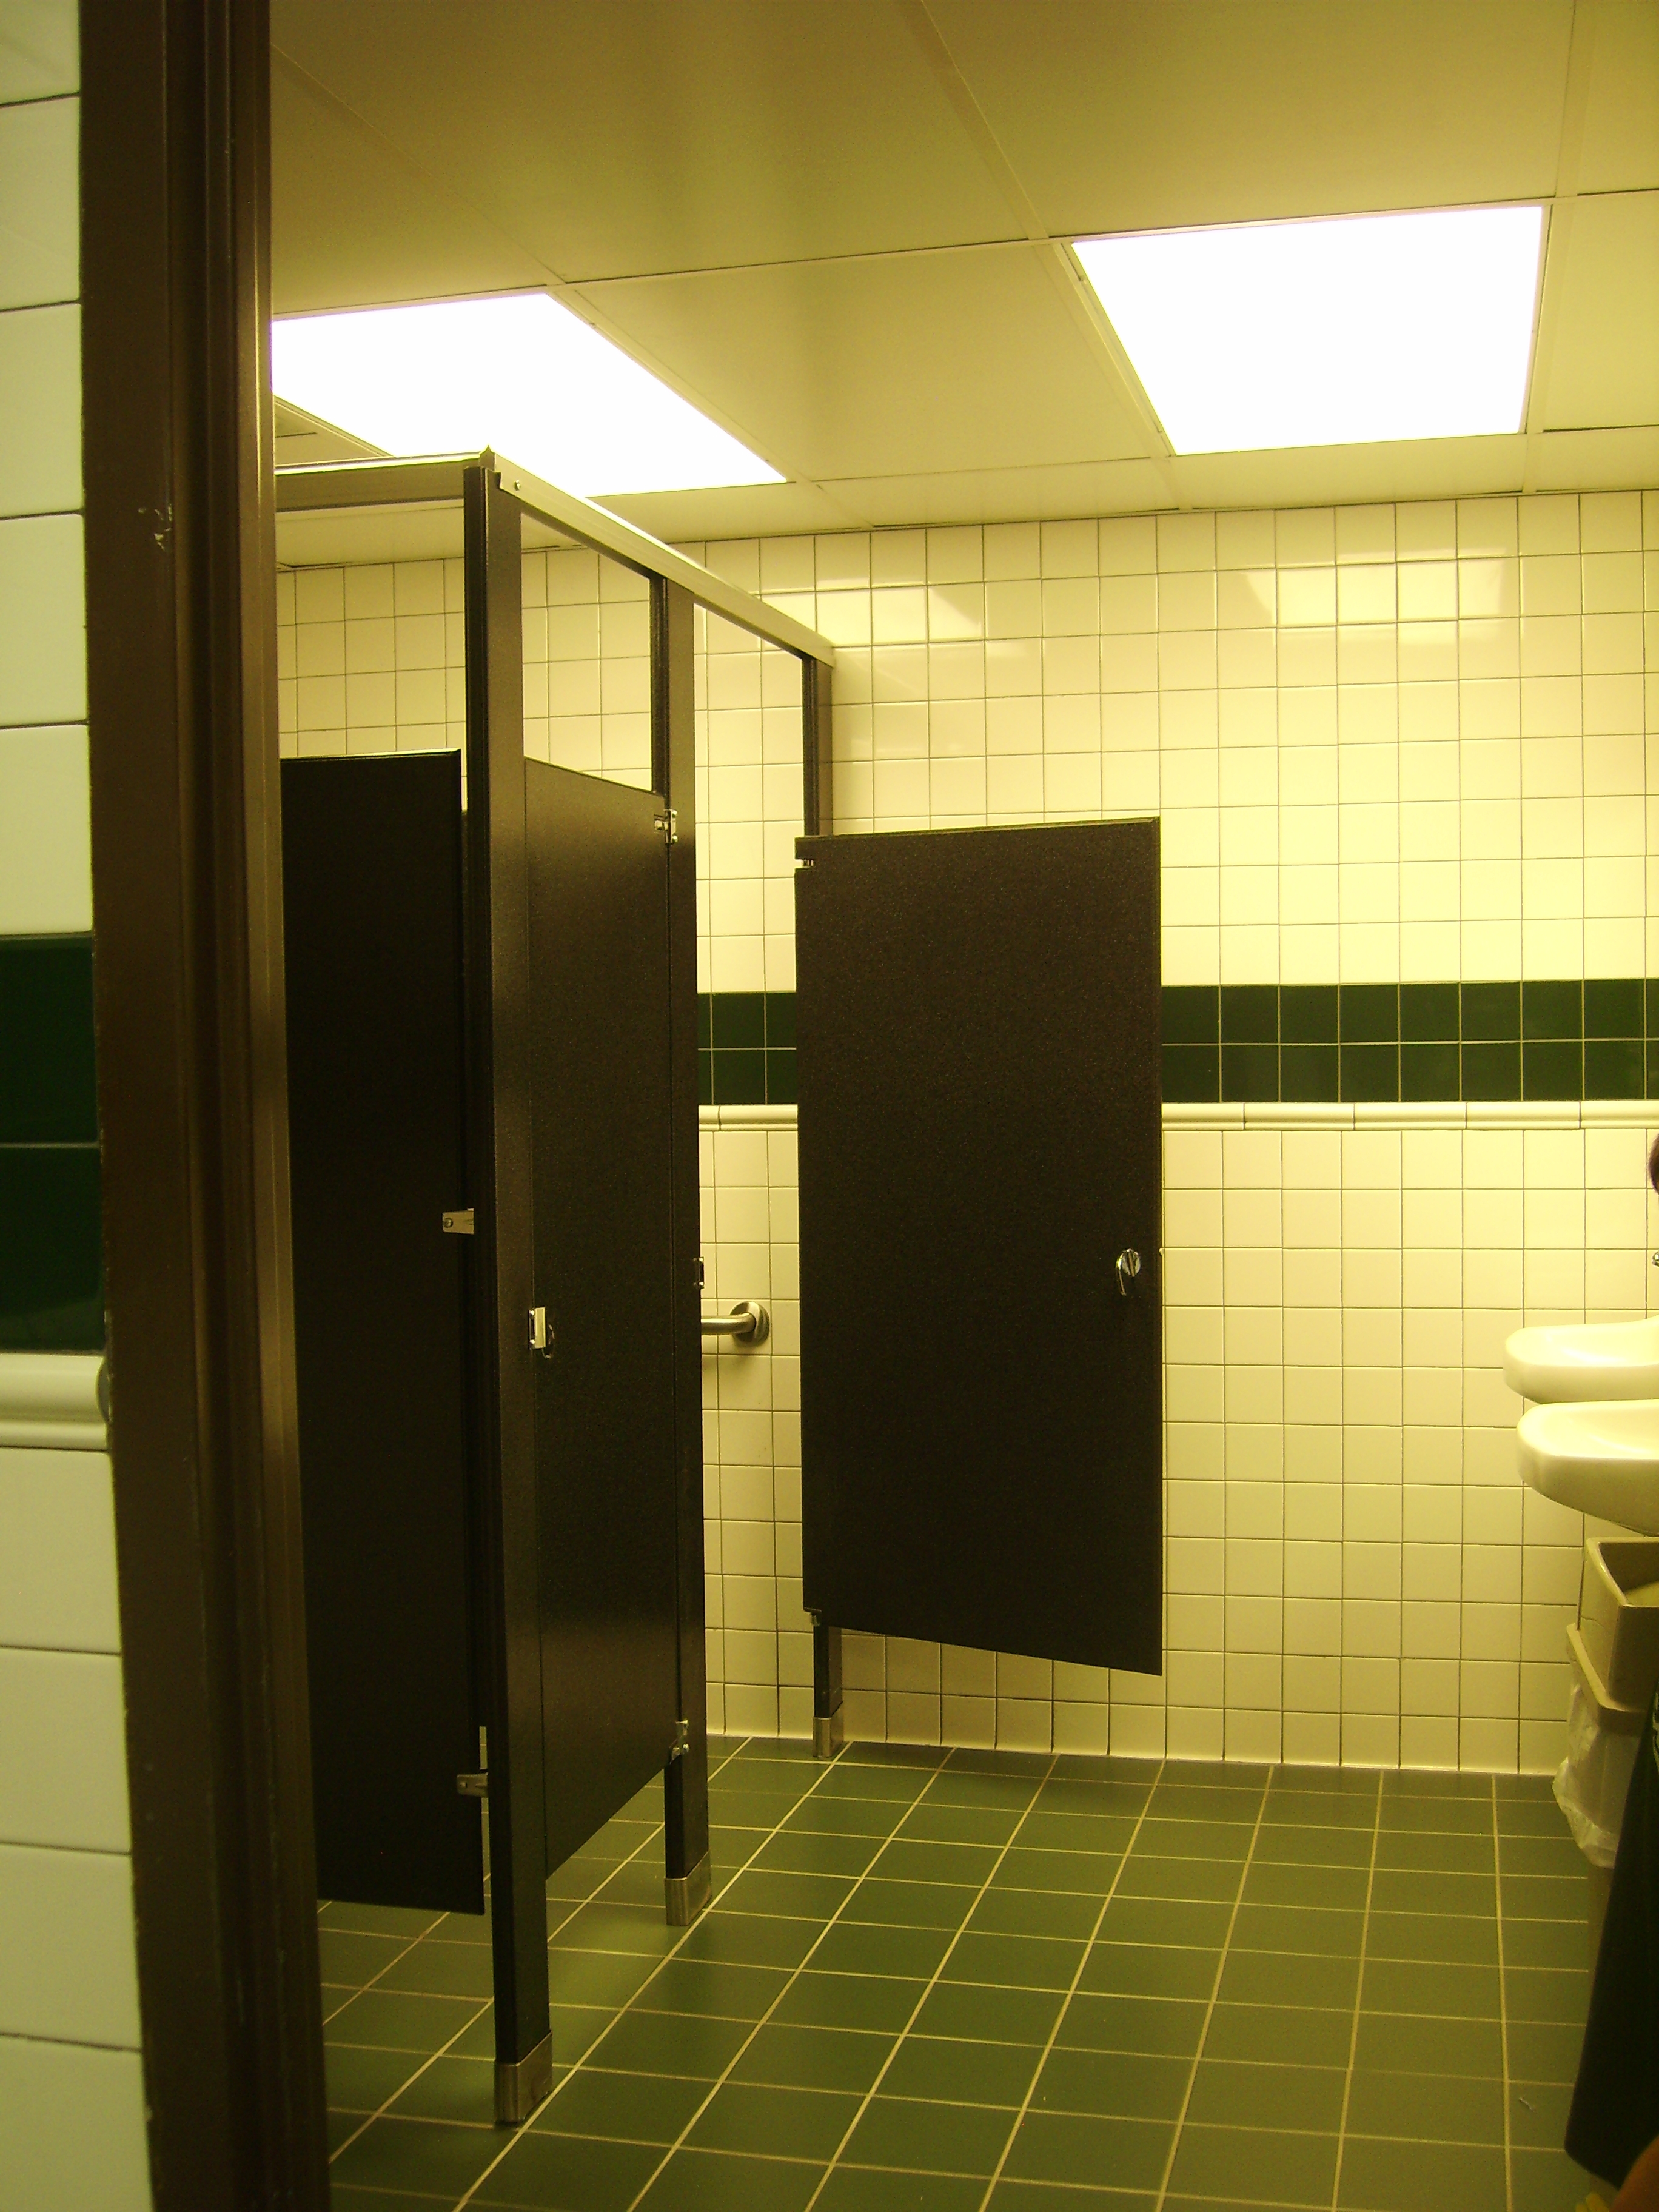 Inside new restrooms